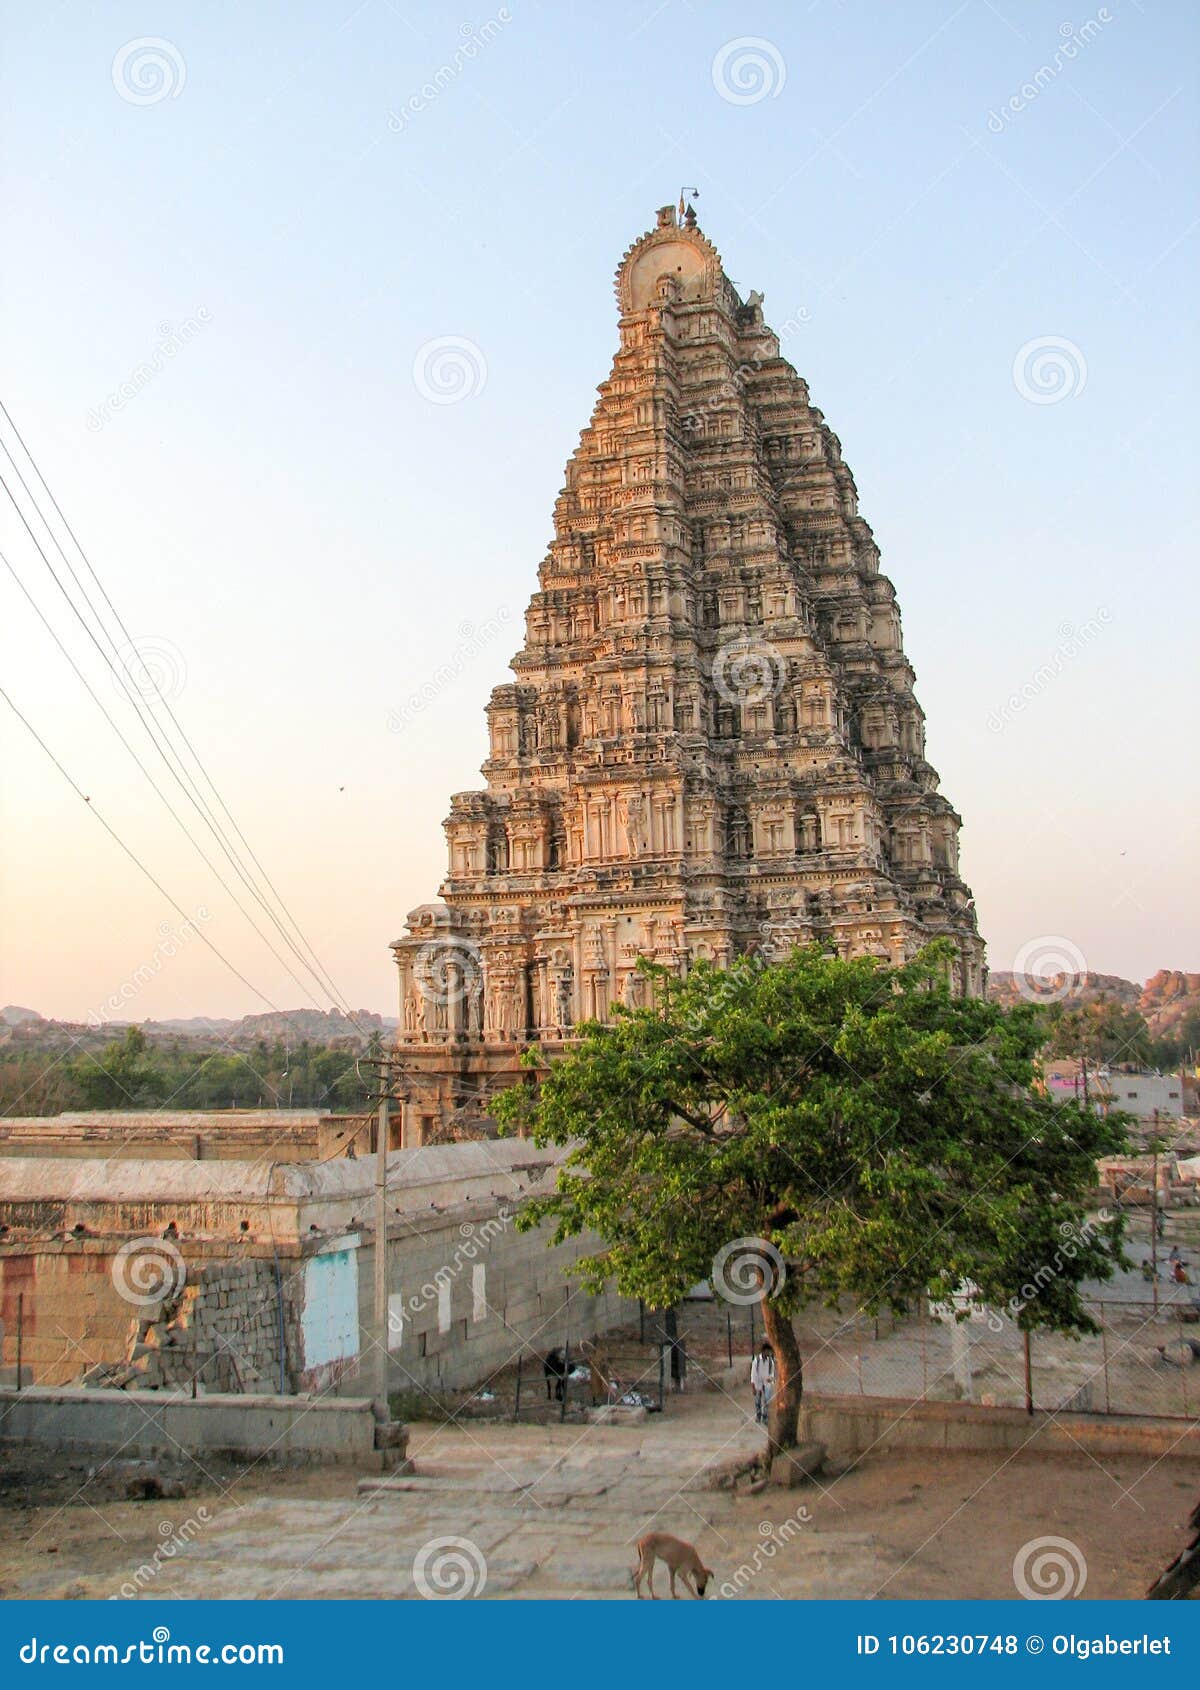 vijayanagar monuments